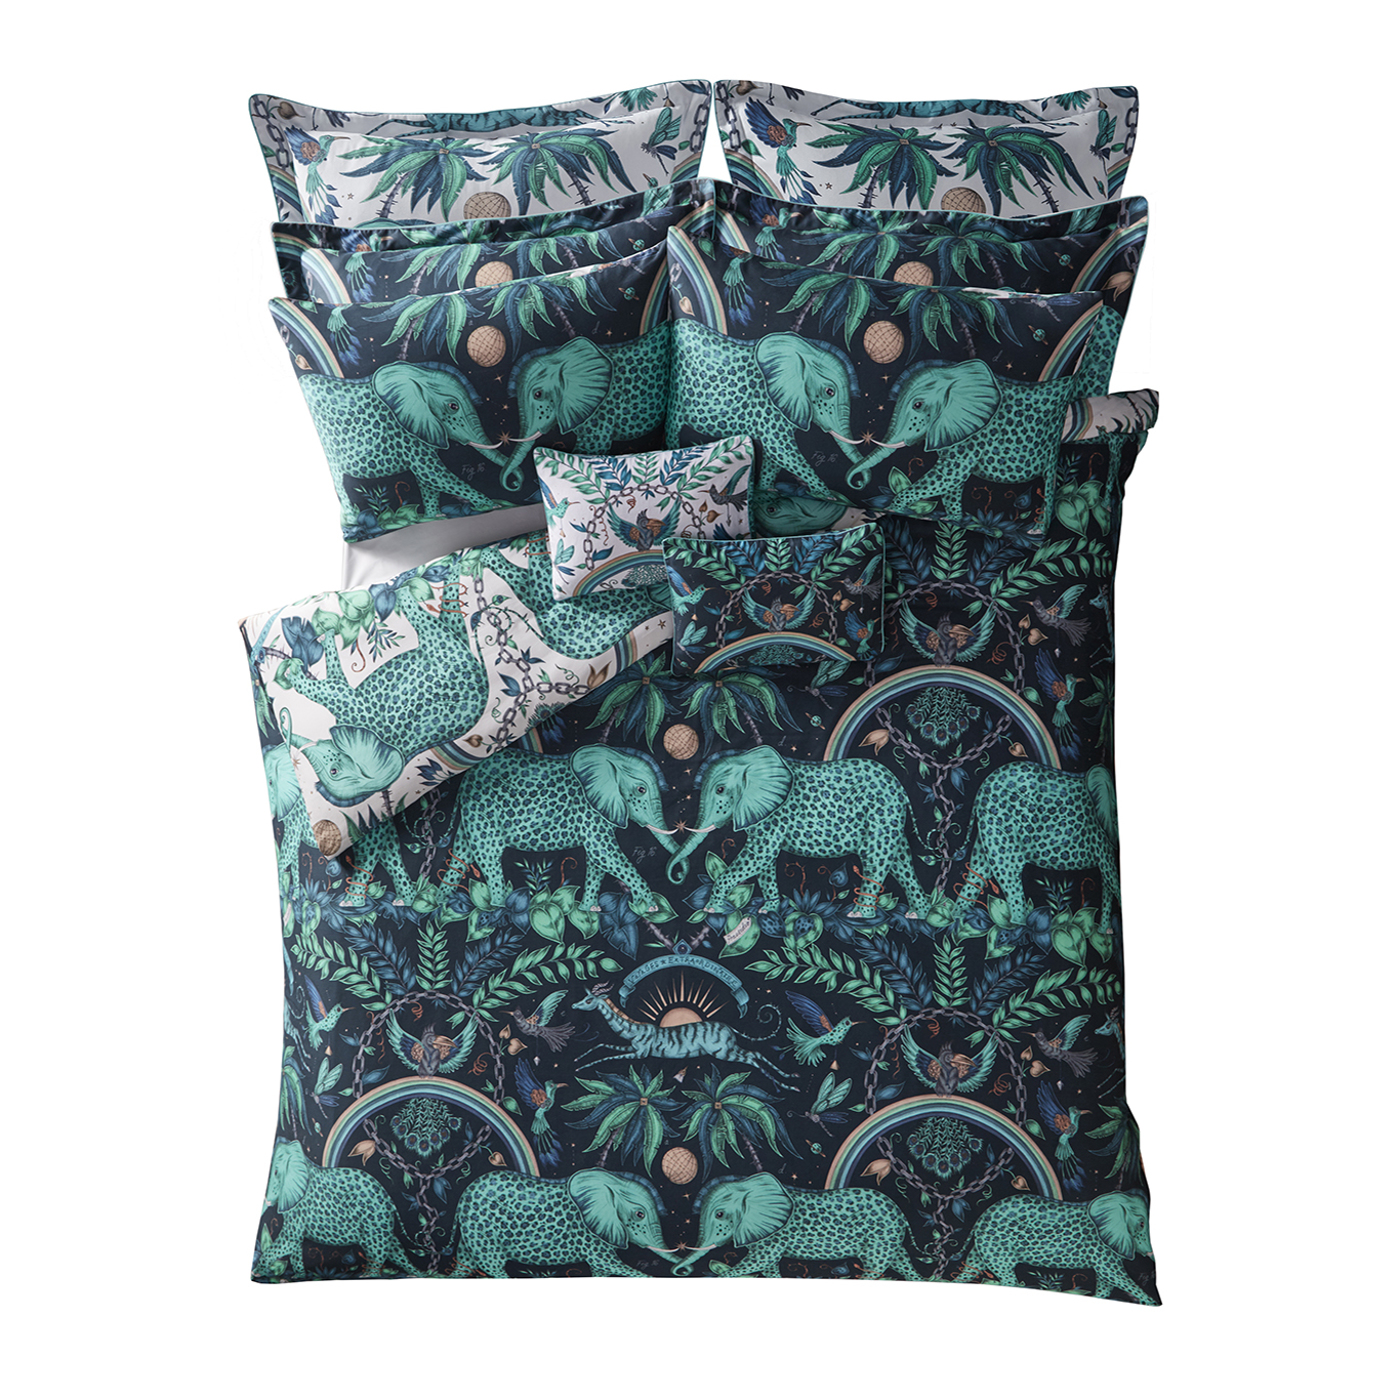 Zambezi Standard Pillowcase Pair Teal Bedding by CNC